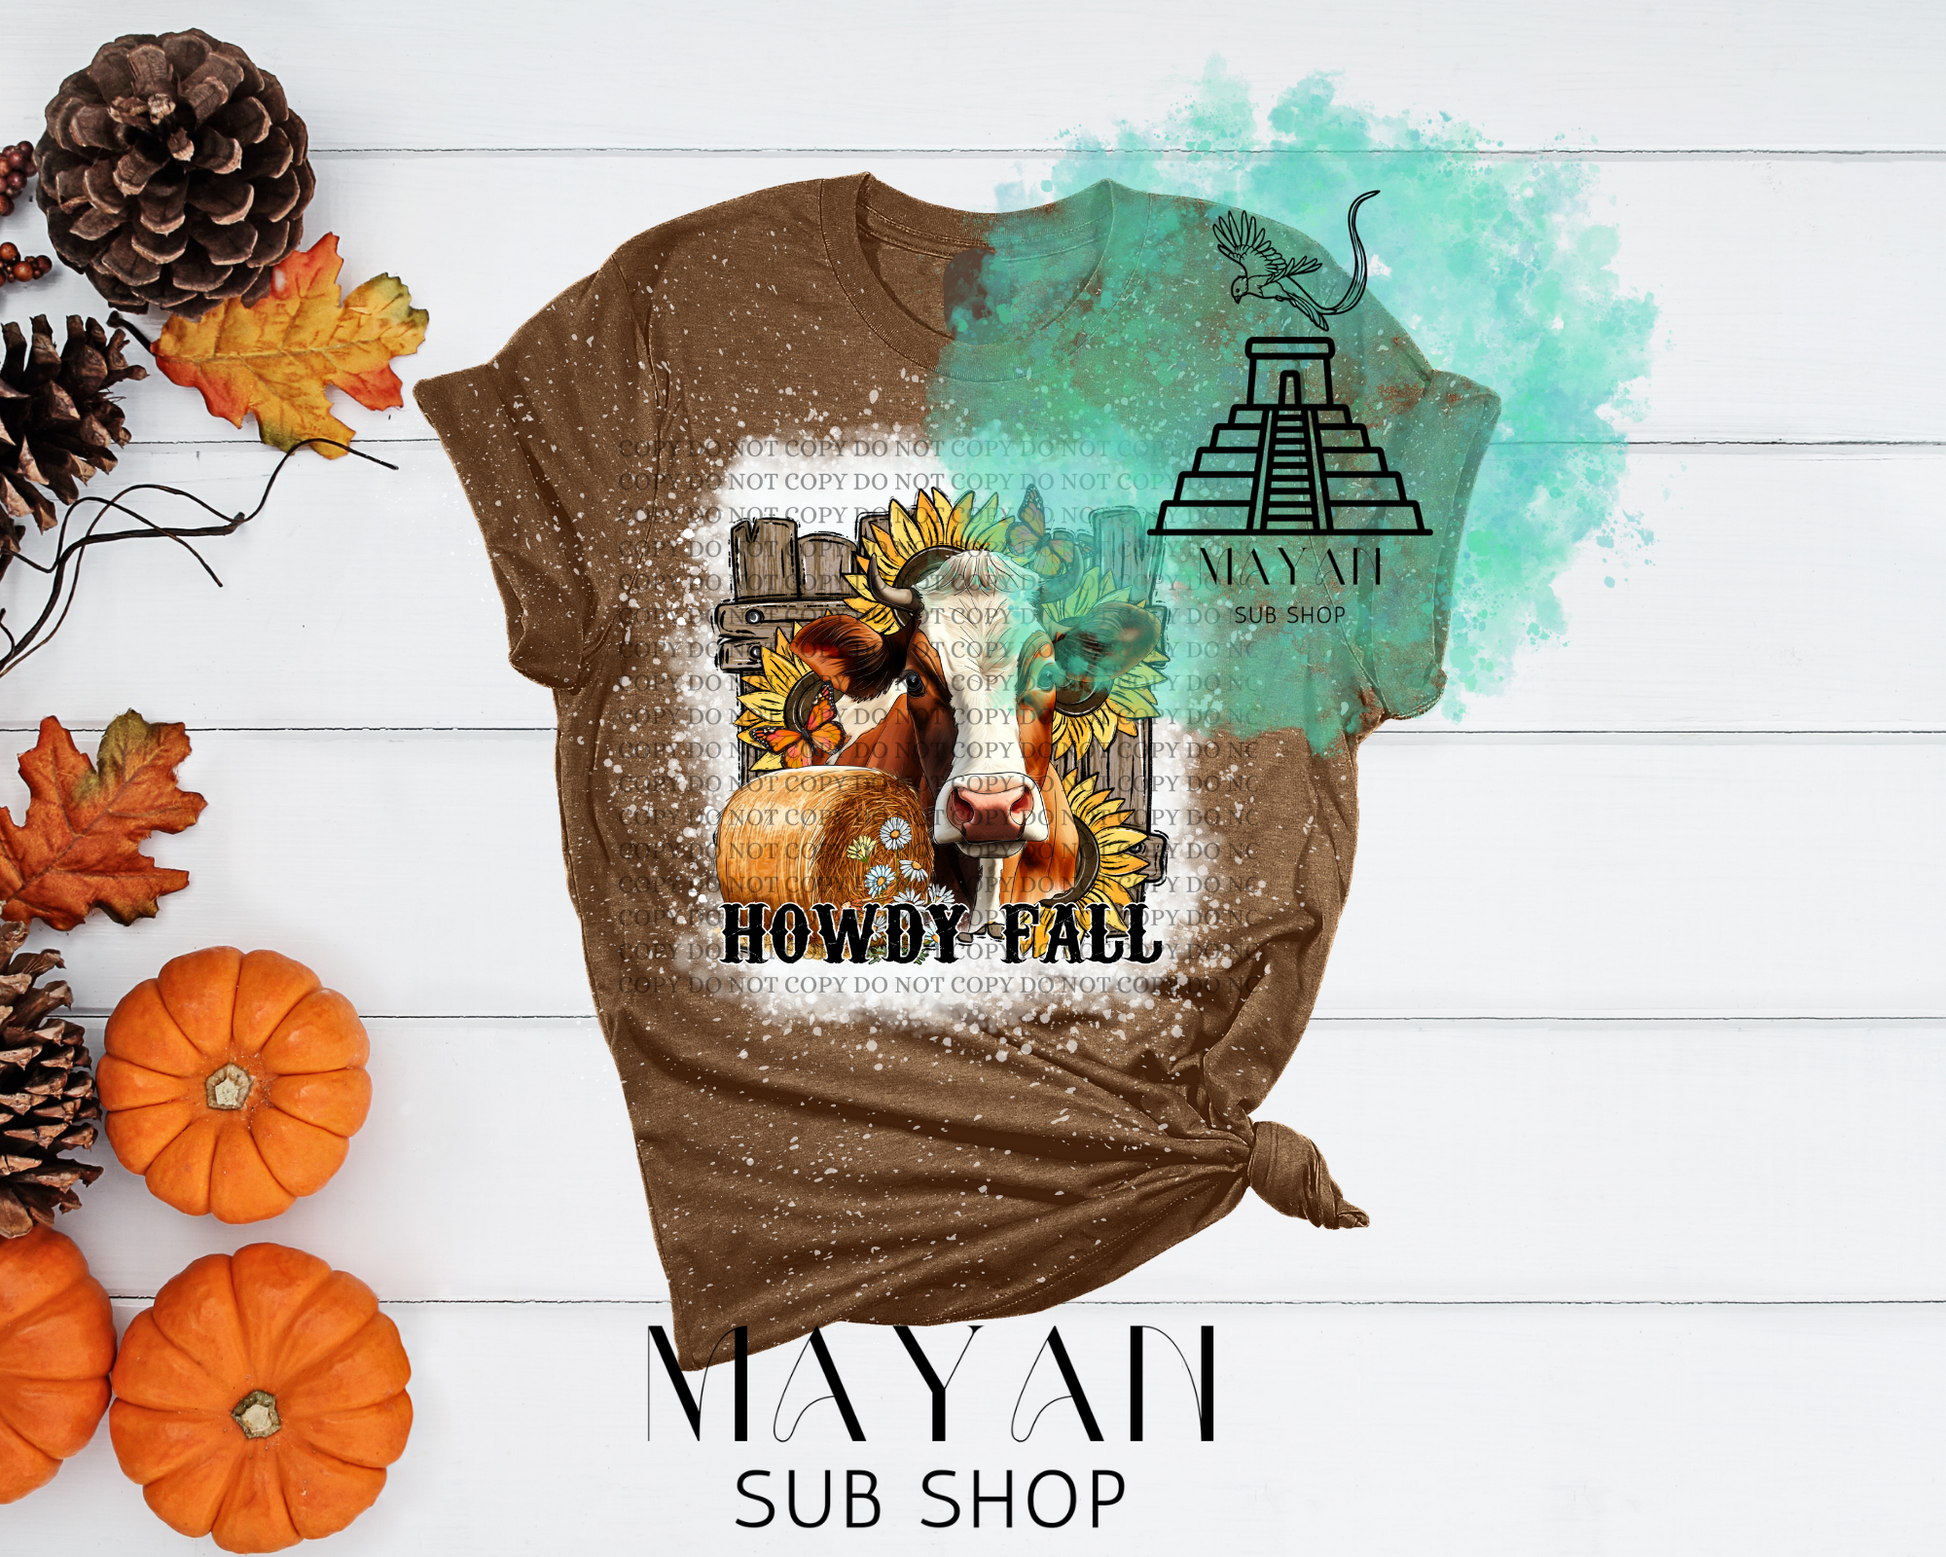 Howdy Fall Bleached Shirt - Mayan Sub Shop